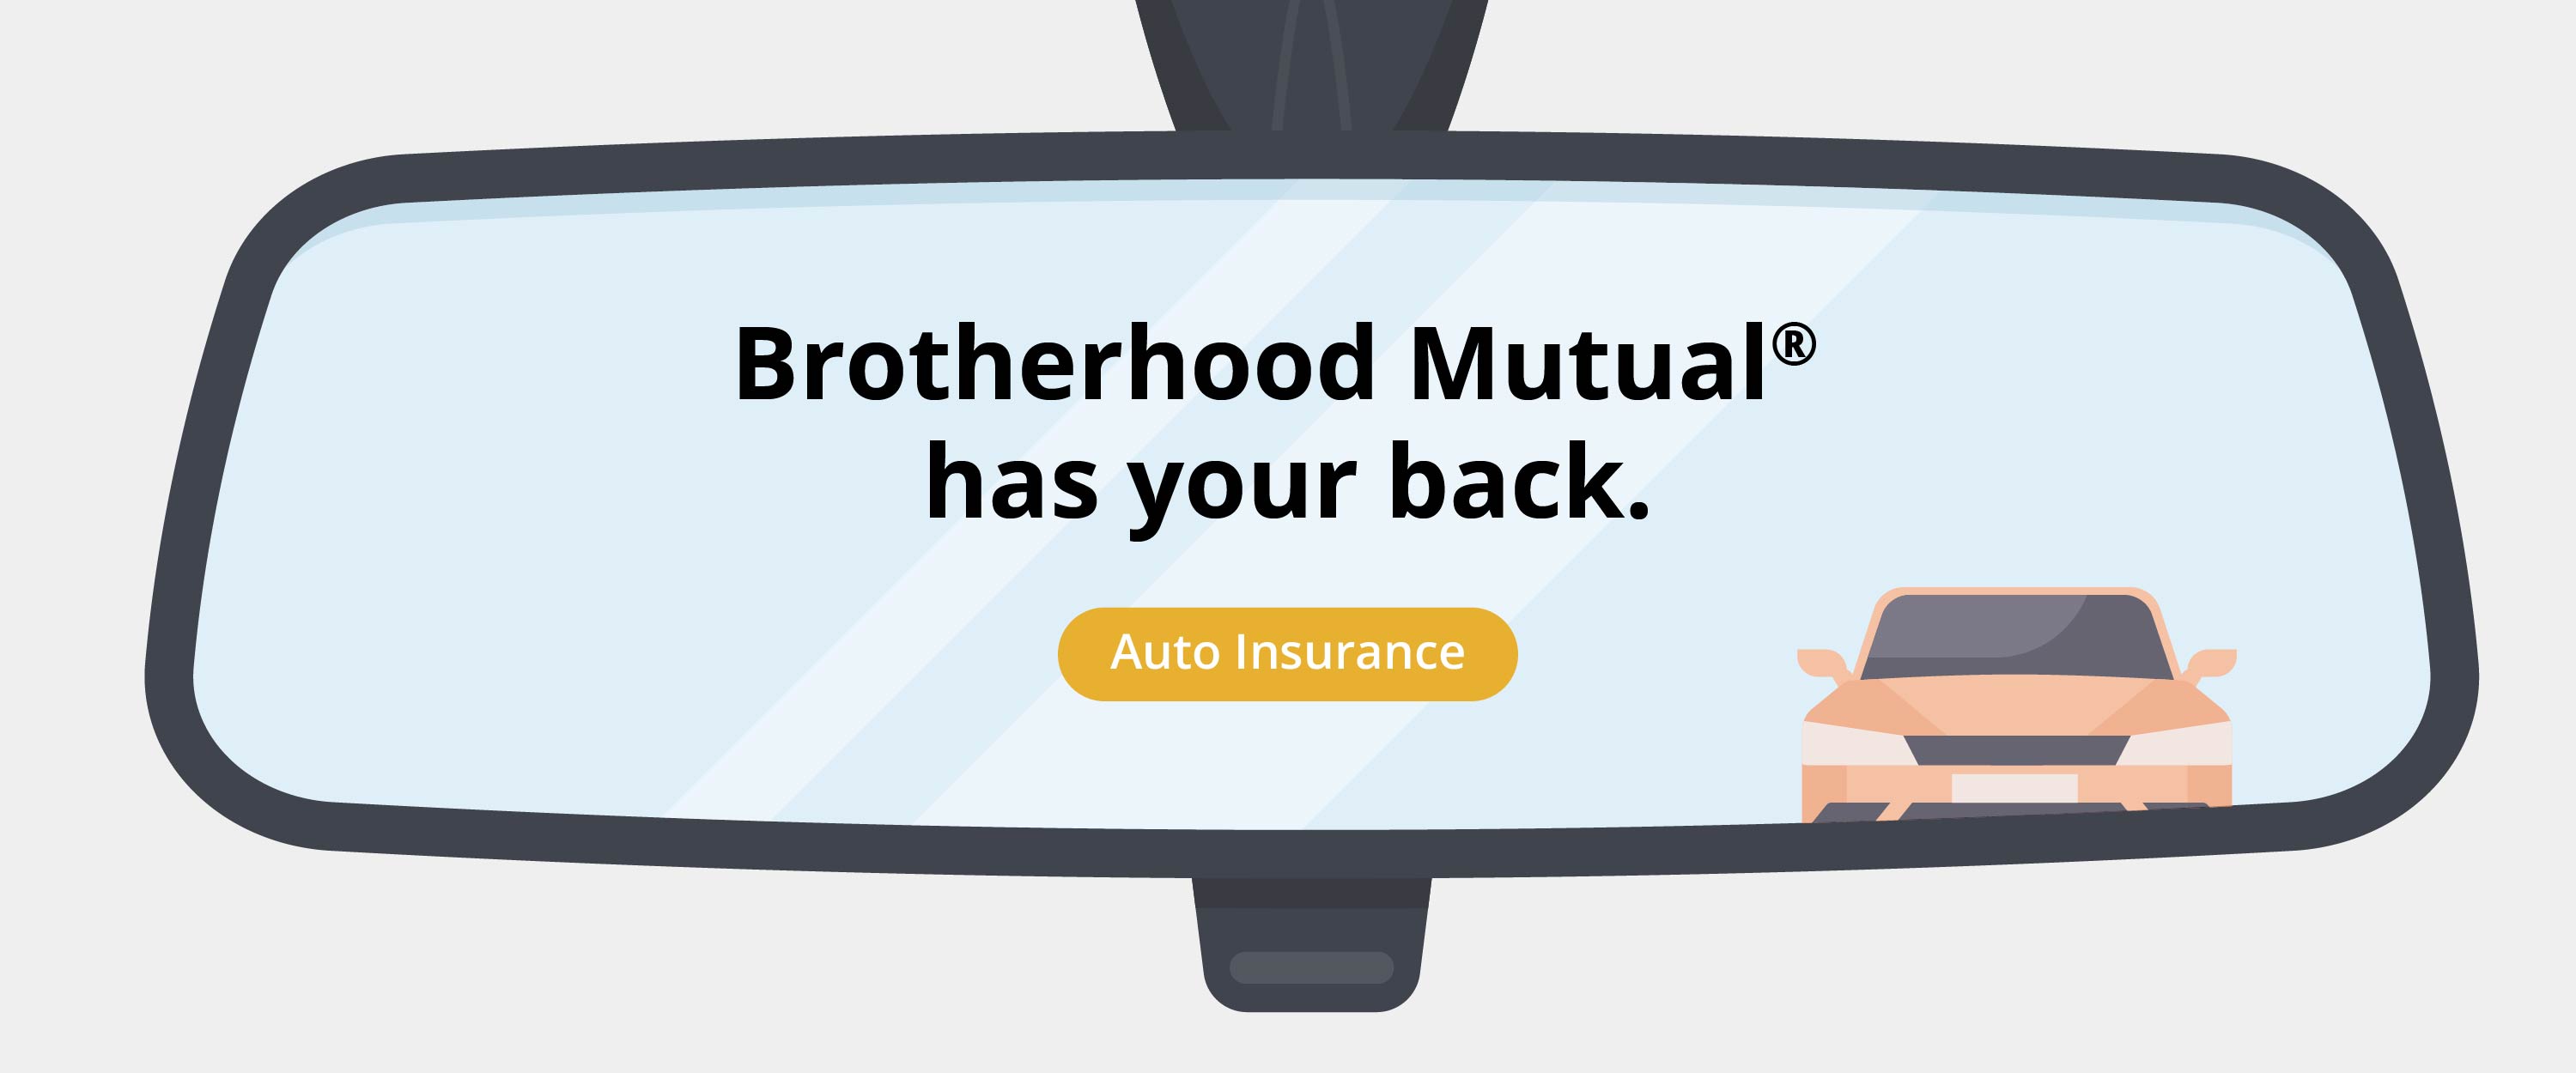 auto insurance banner ad